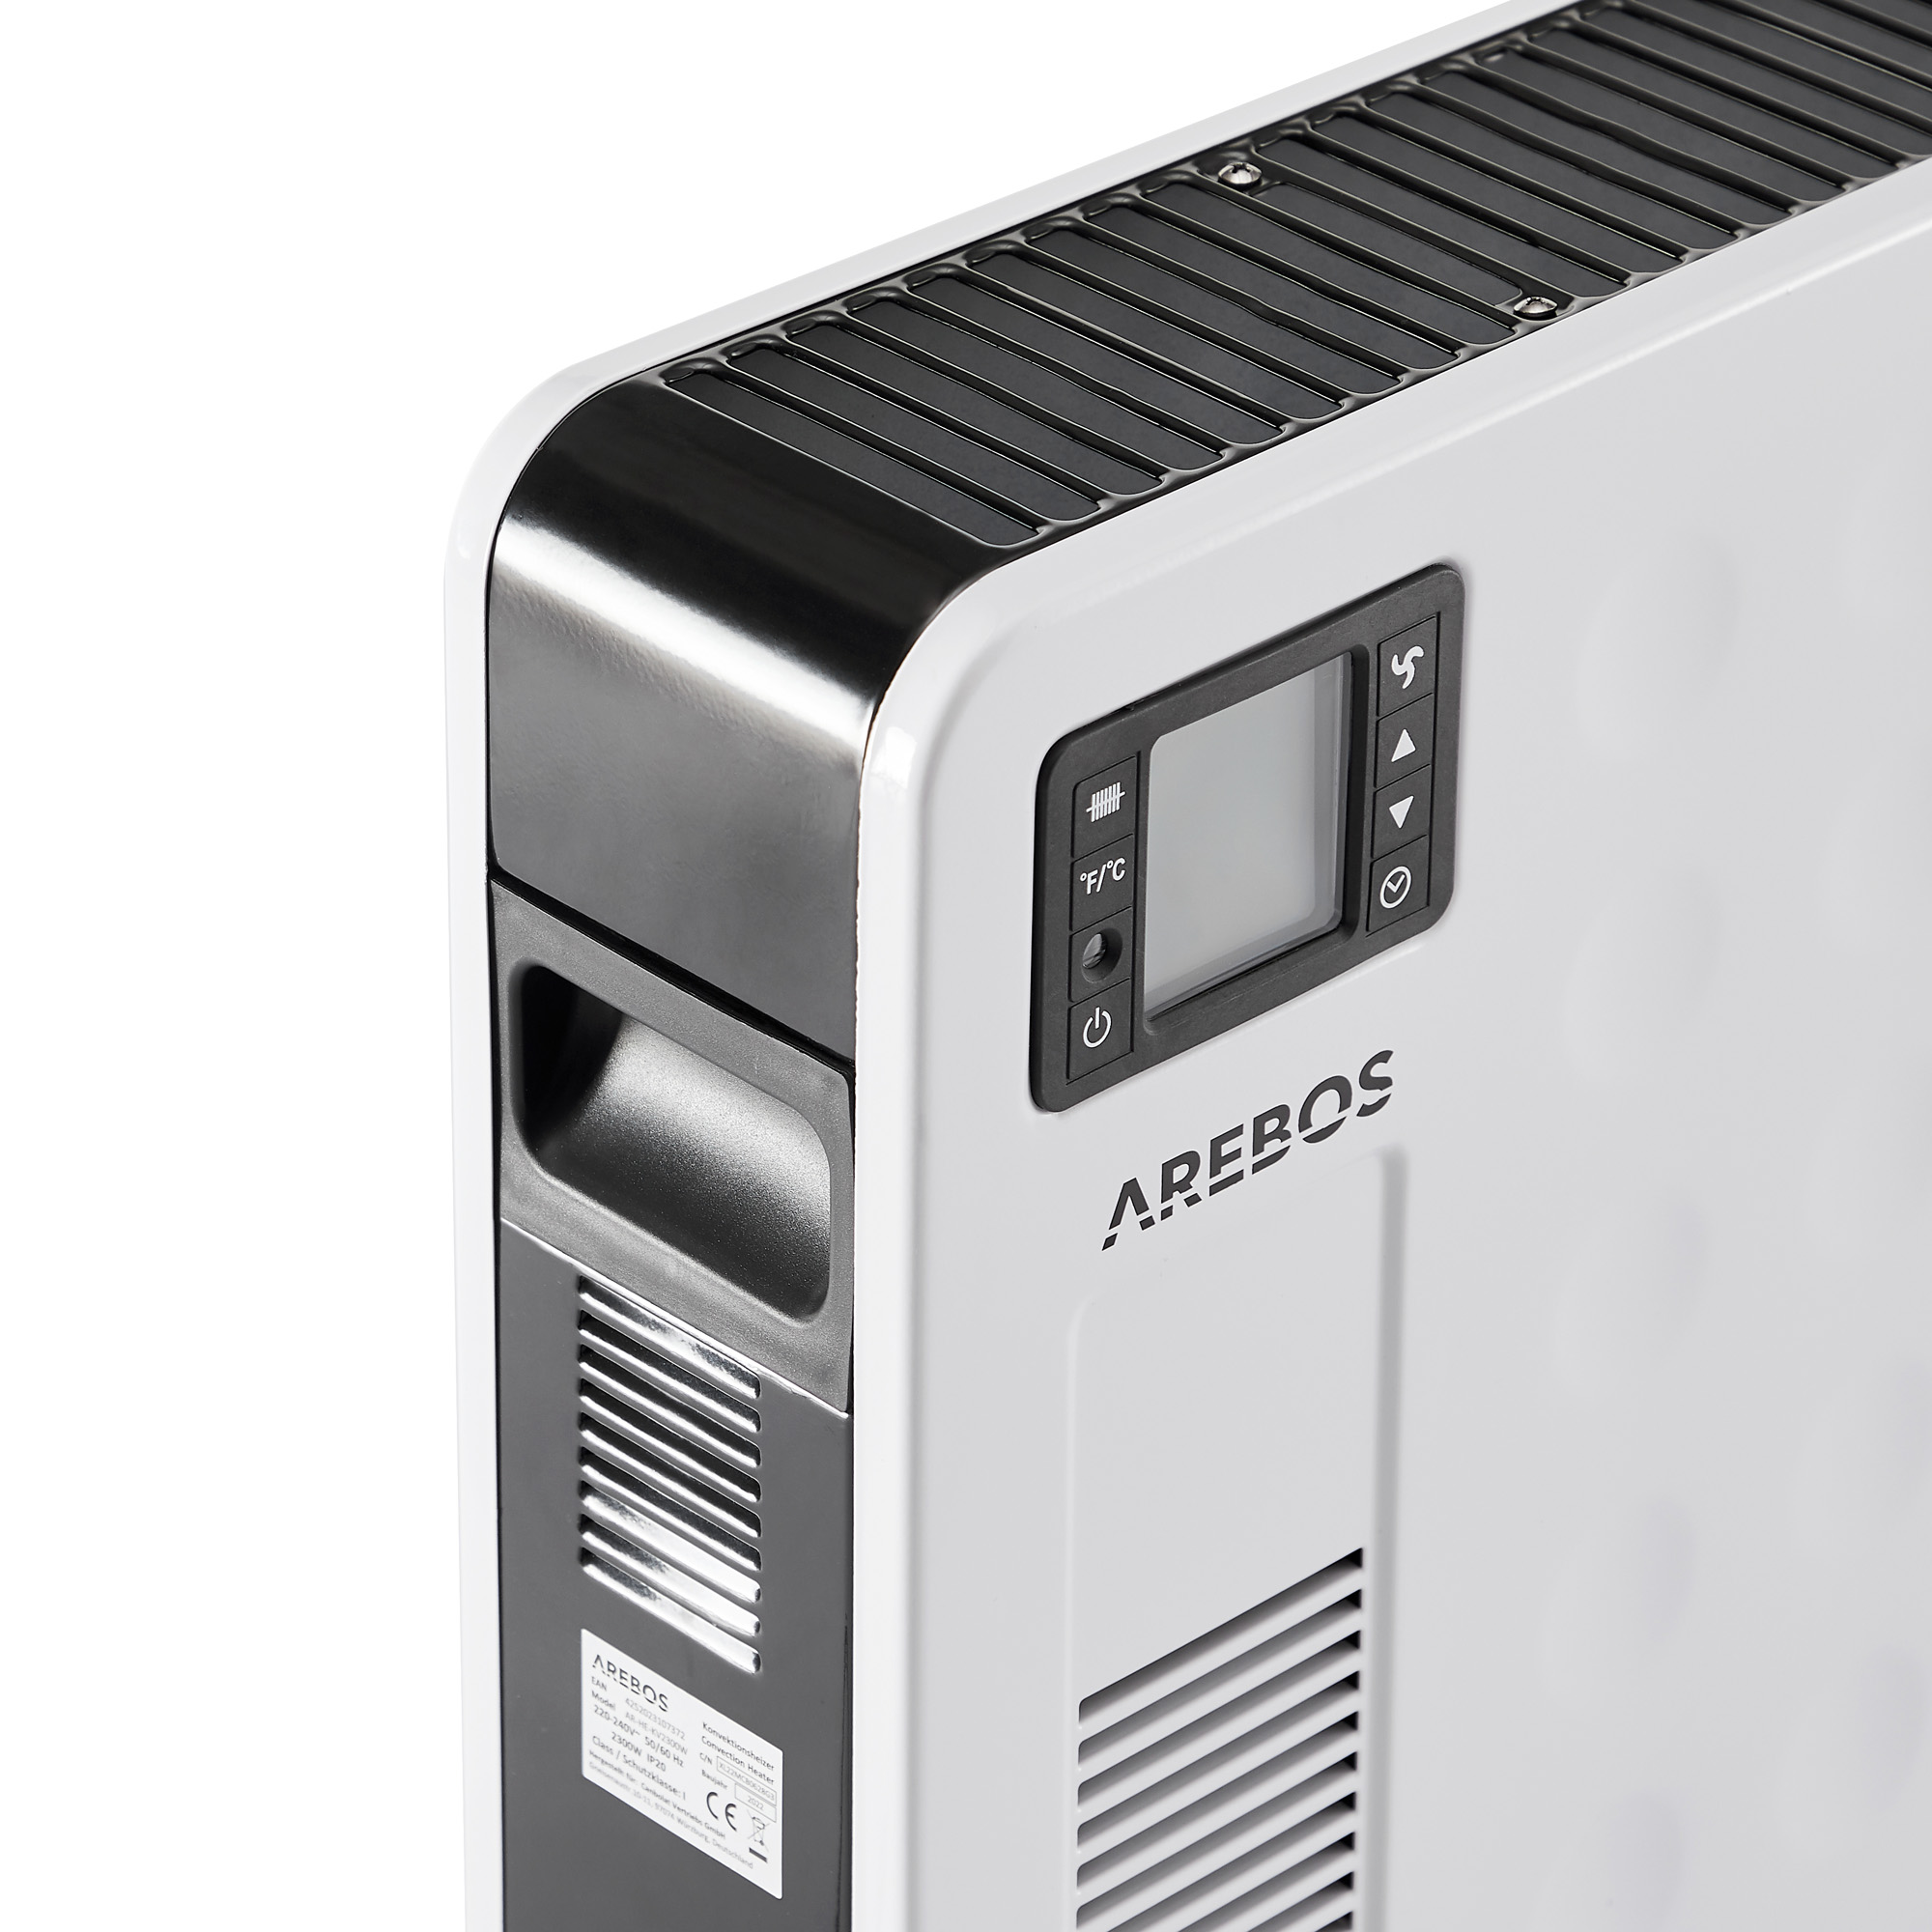 AREBOS Inkl. Fernbedienung integriertes Watt) (2300 Energiesparend Thermostat | Konvektor